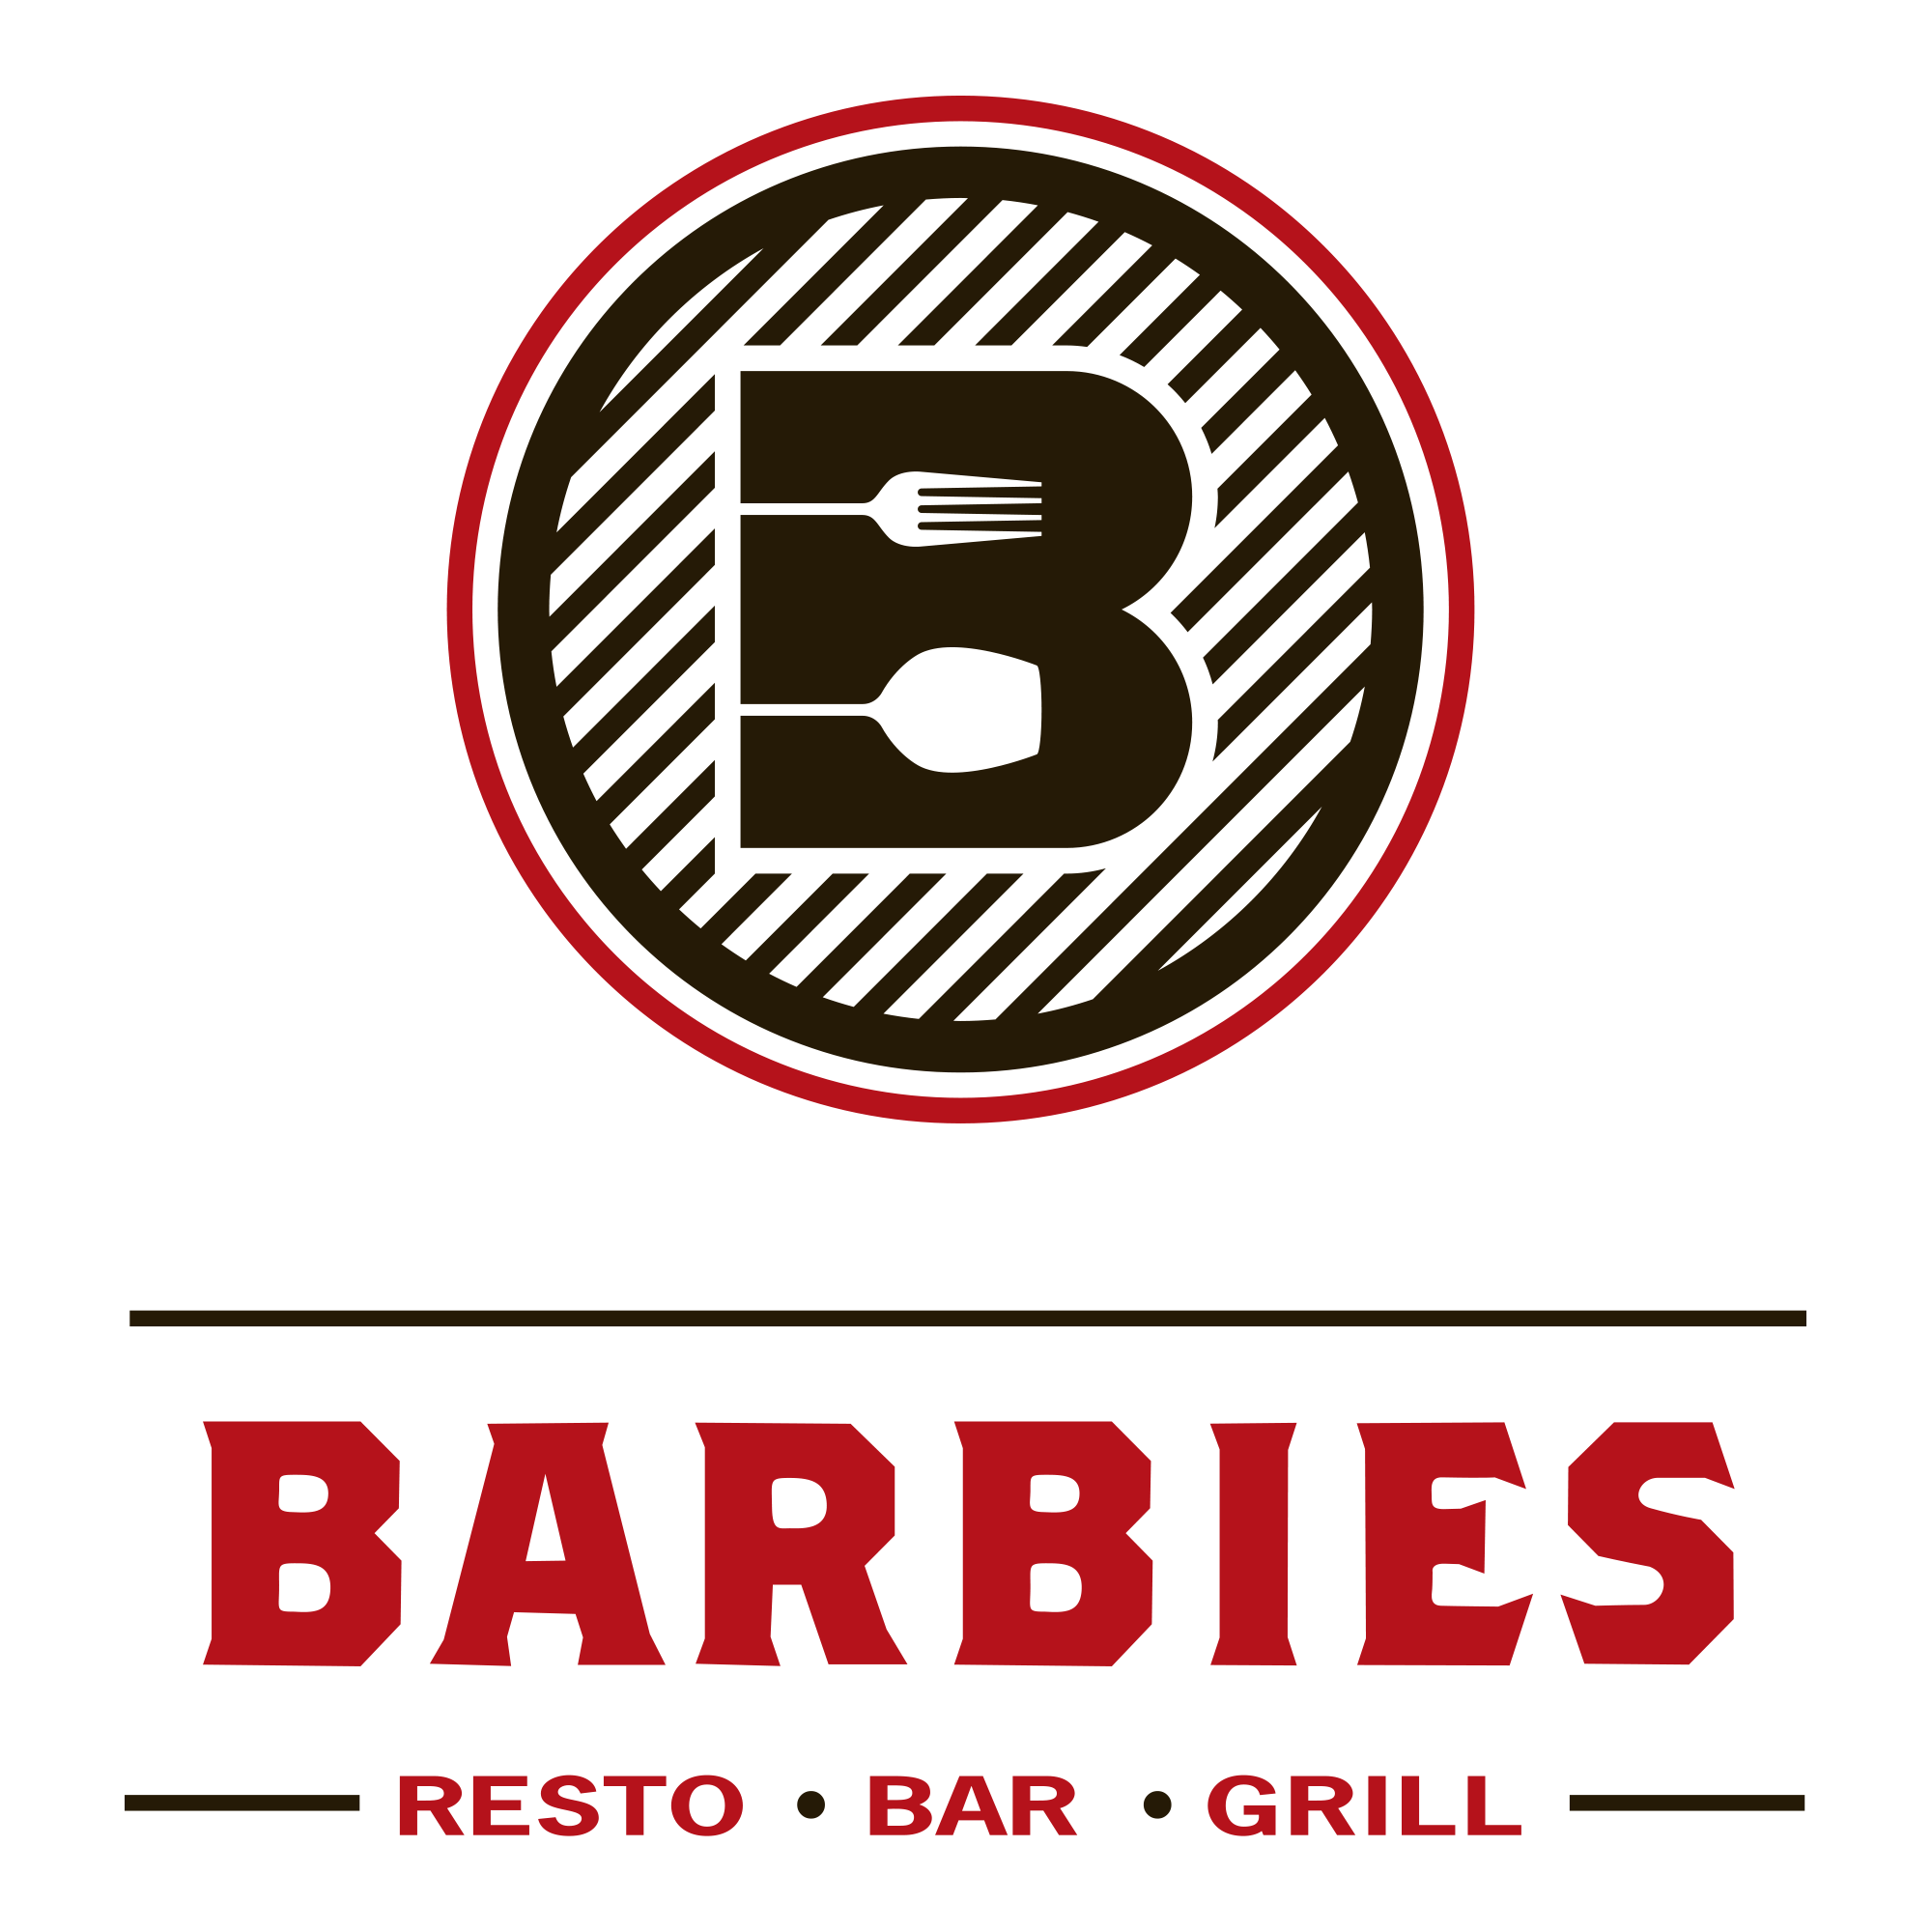 Restaurant Bar and Grill Logo - Family Restaurant Grill. Barbies Resto Bar Grill